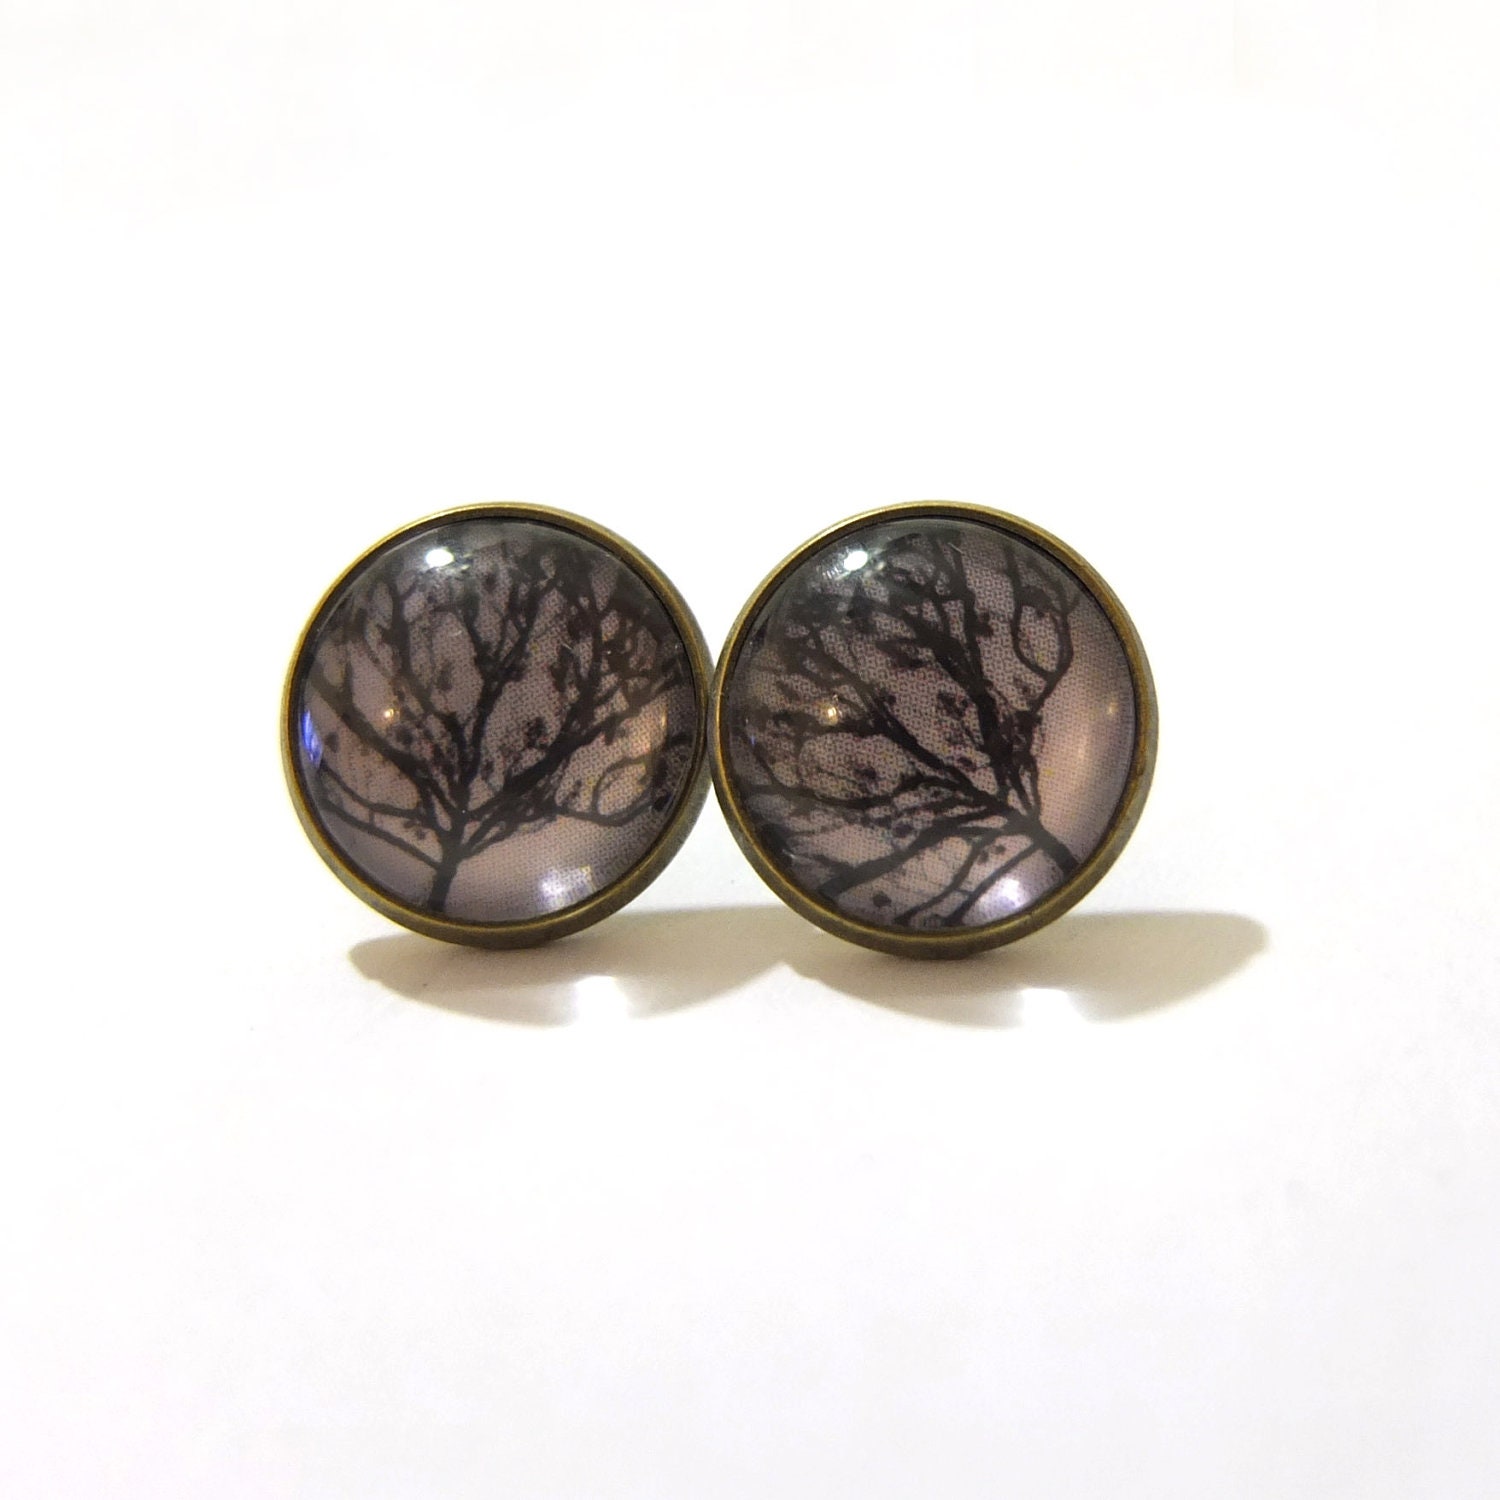 Stud Earrings - Willow Tree,Brown, Fall, Winter, Tree Silhouette, Nature, Bronze, Post Earrings, Earrings Stud, Simple, Modern, Chic